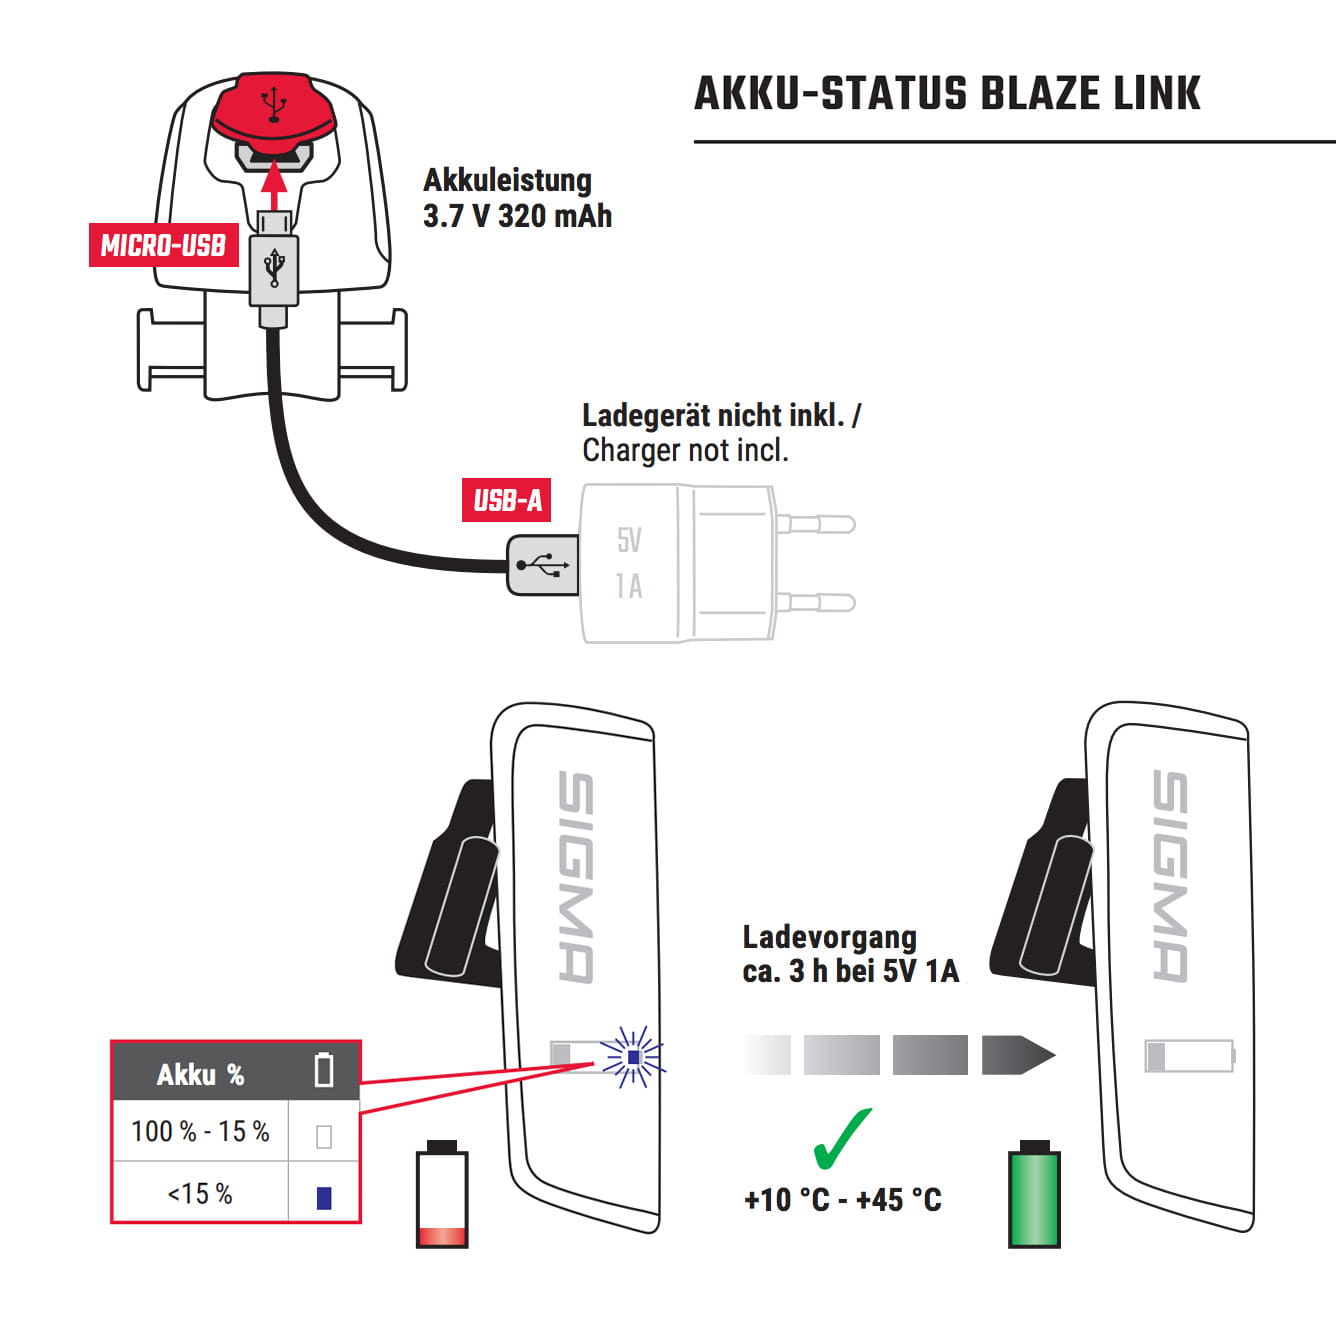 Sigma AURA 100 LED Bike Light and Rear Light Blaze Link with USB